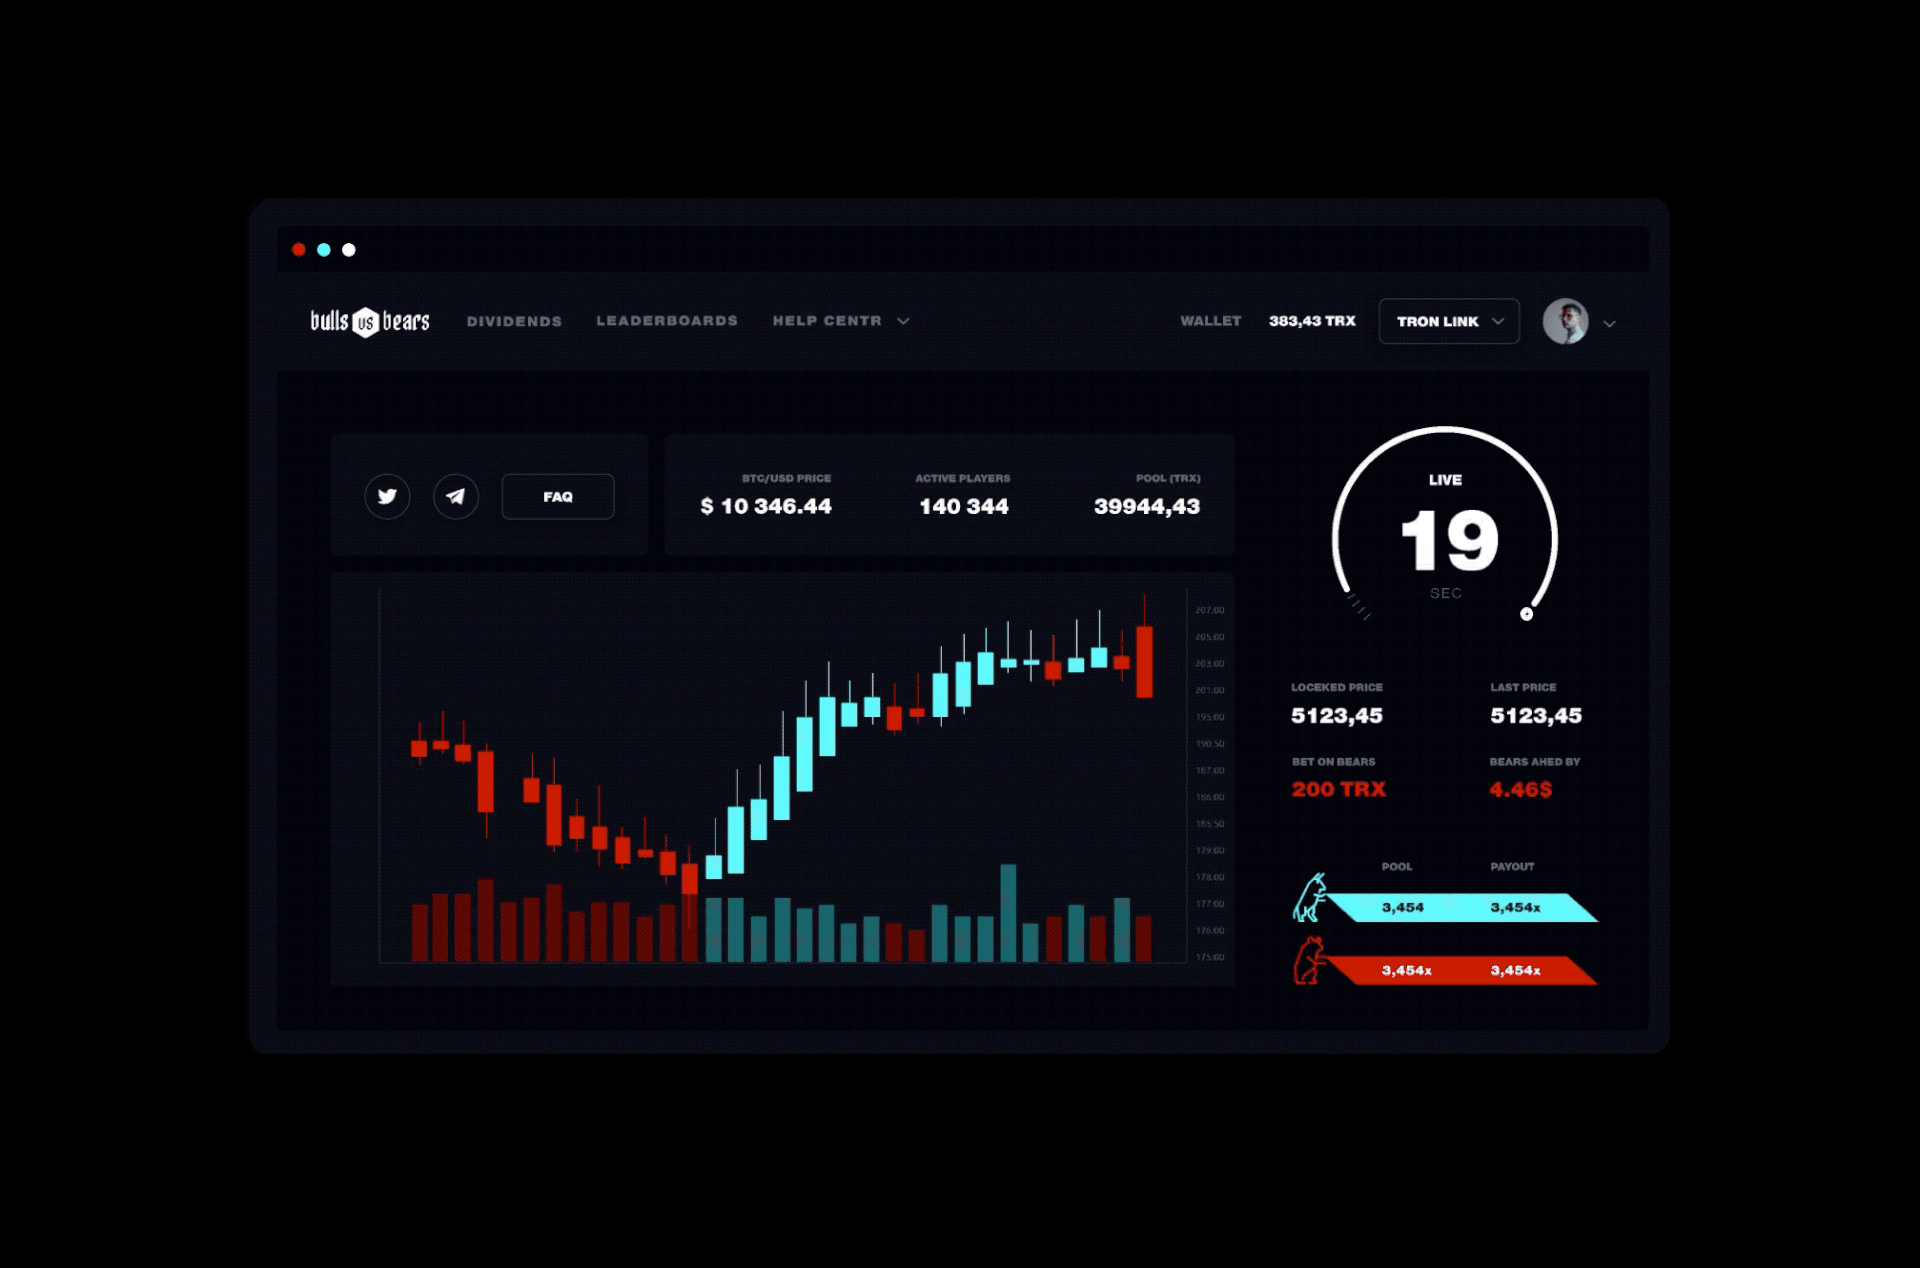 Bulls&bears realtime charts & trading